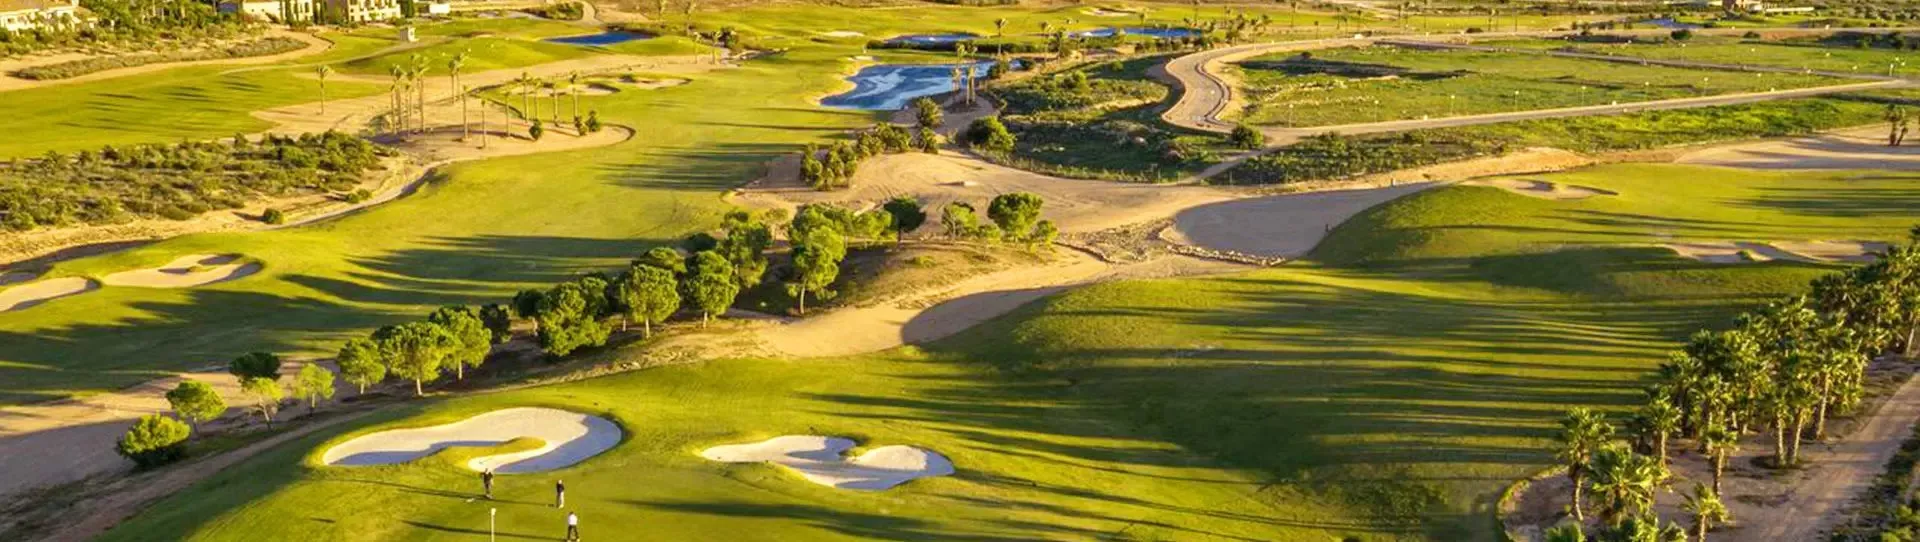 Spain golf courses - Hacienda del Alamo Golf Resort - Photo 3